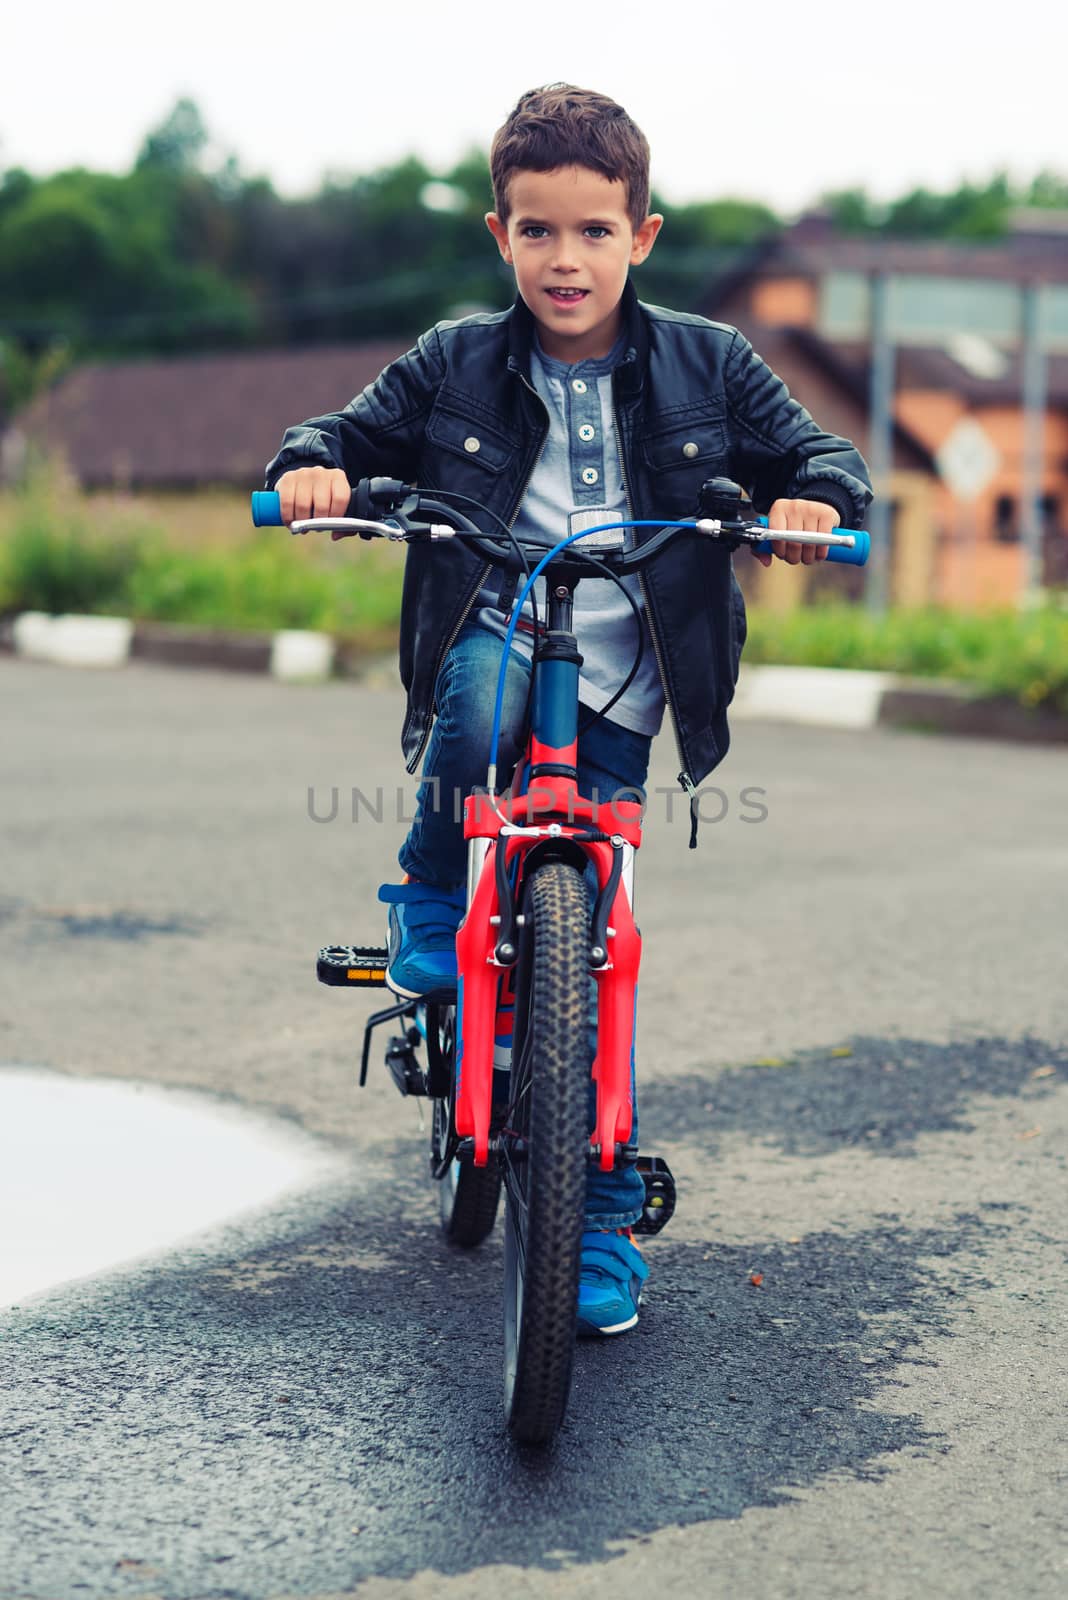 Cute boy riding a bike by kzen